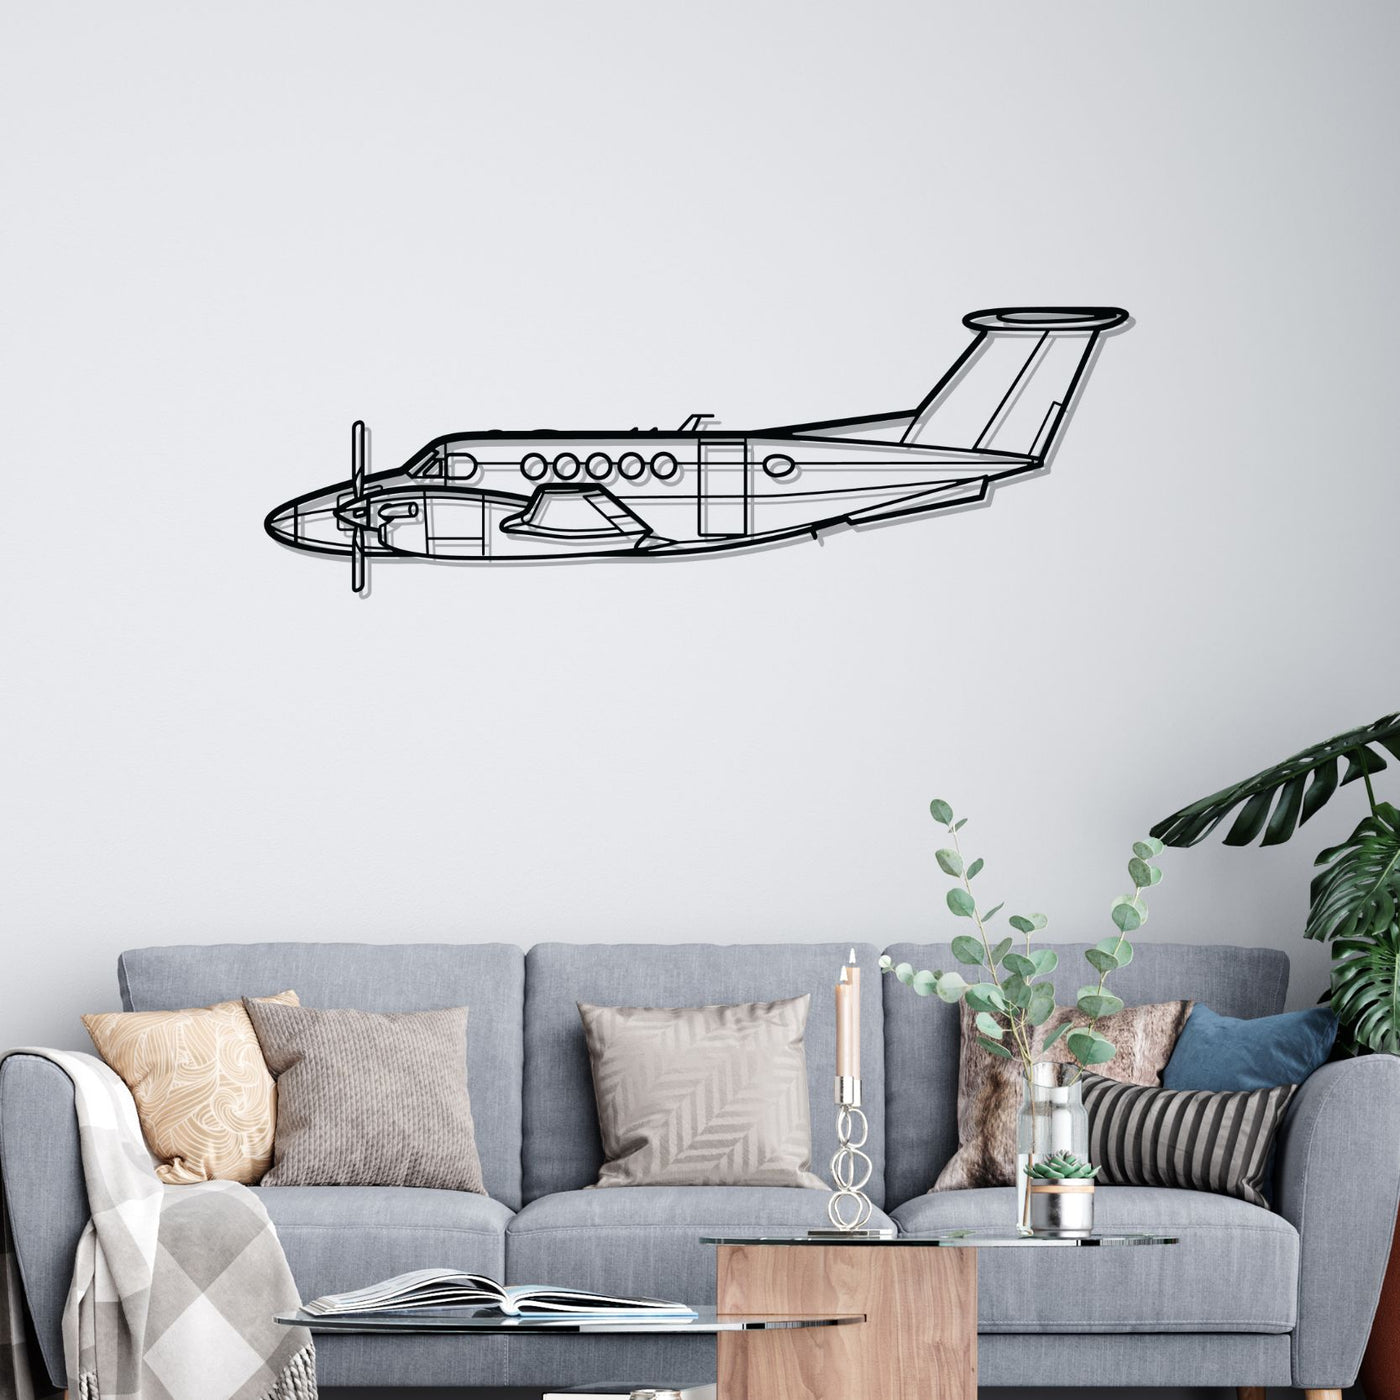 King Air B200 Silhouette Metal Wall Art